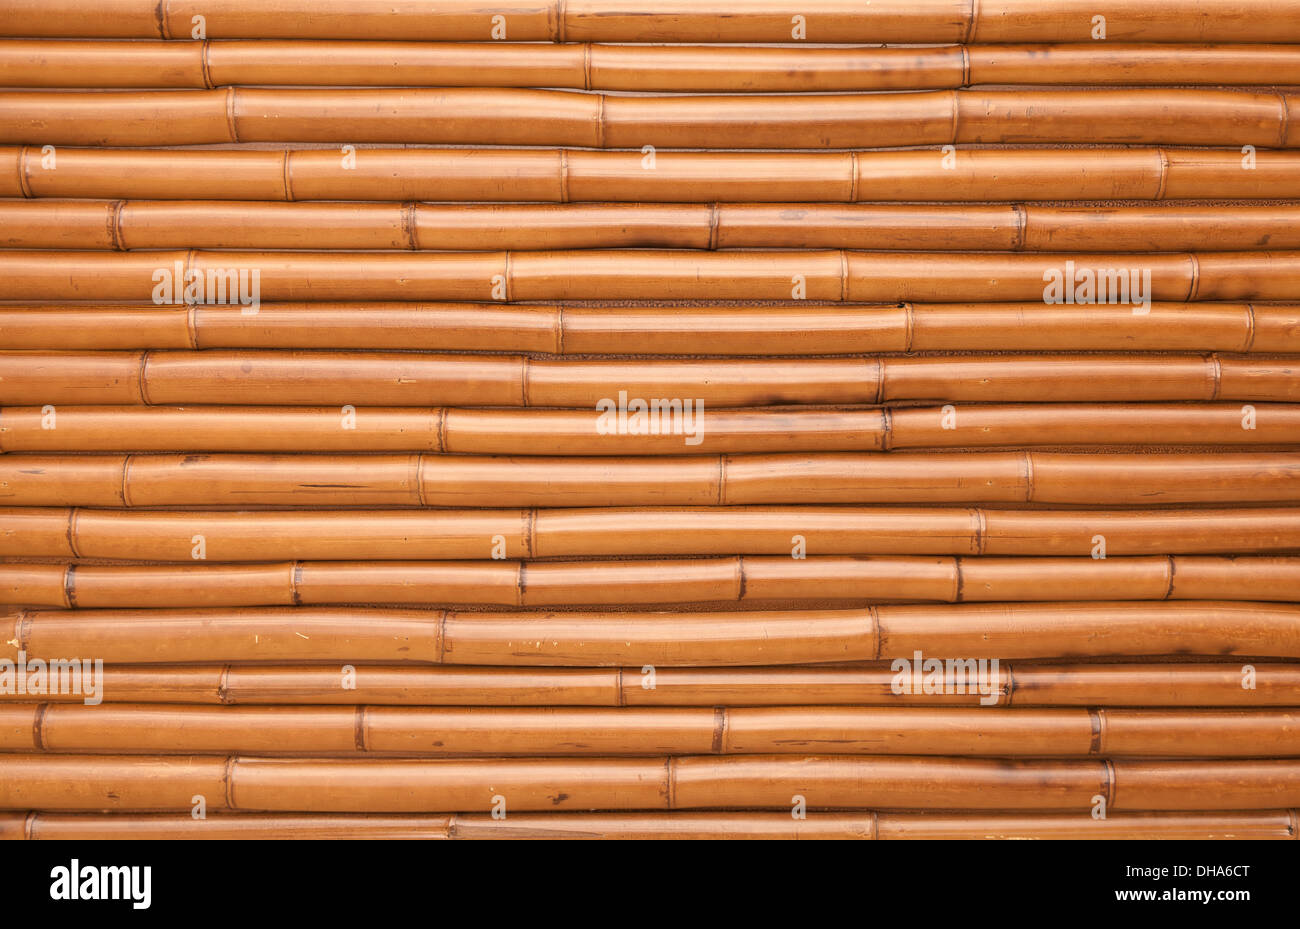 New shining bamboo wall horizontal photo background texture Stock Photo